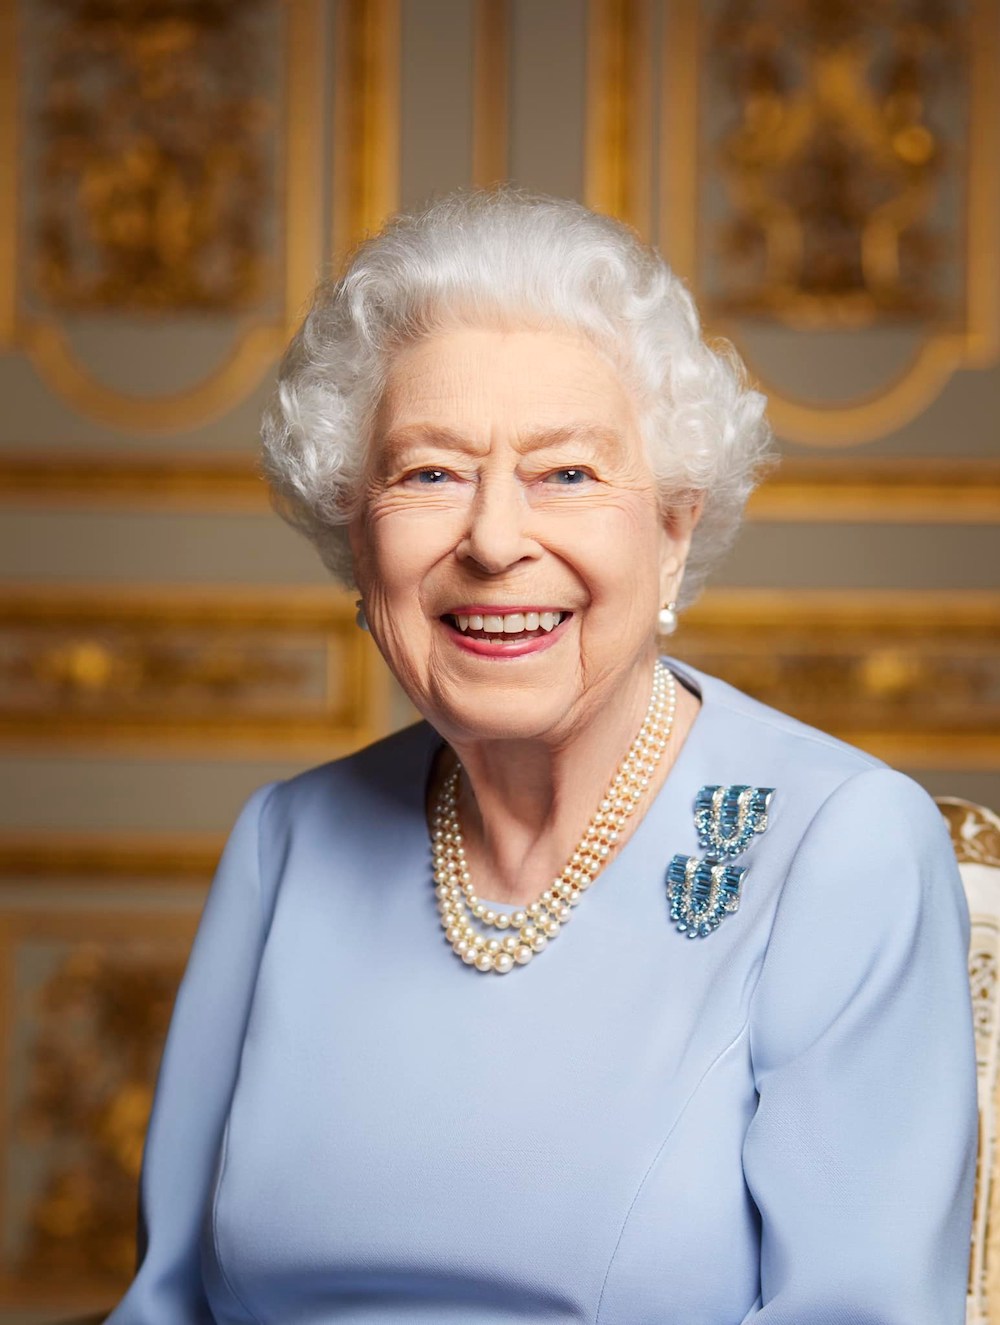 Platinum Jubilee portrait for Queen Elizabeth II. Photo Credit: © British Royal Family.